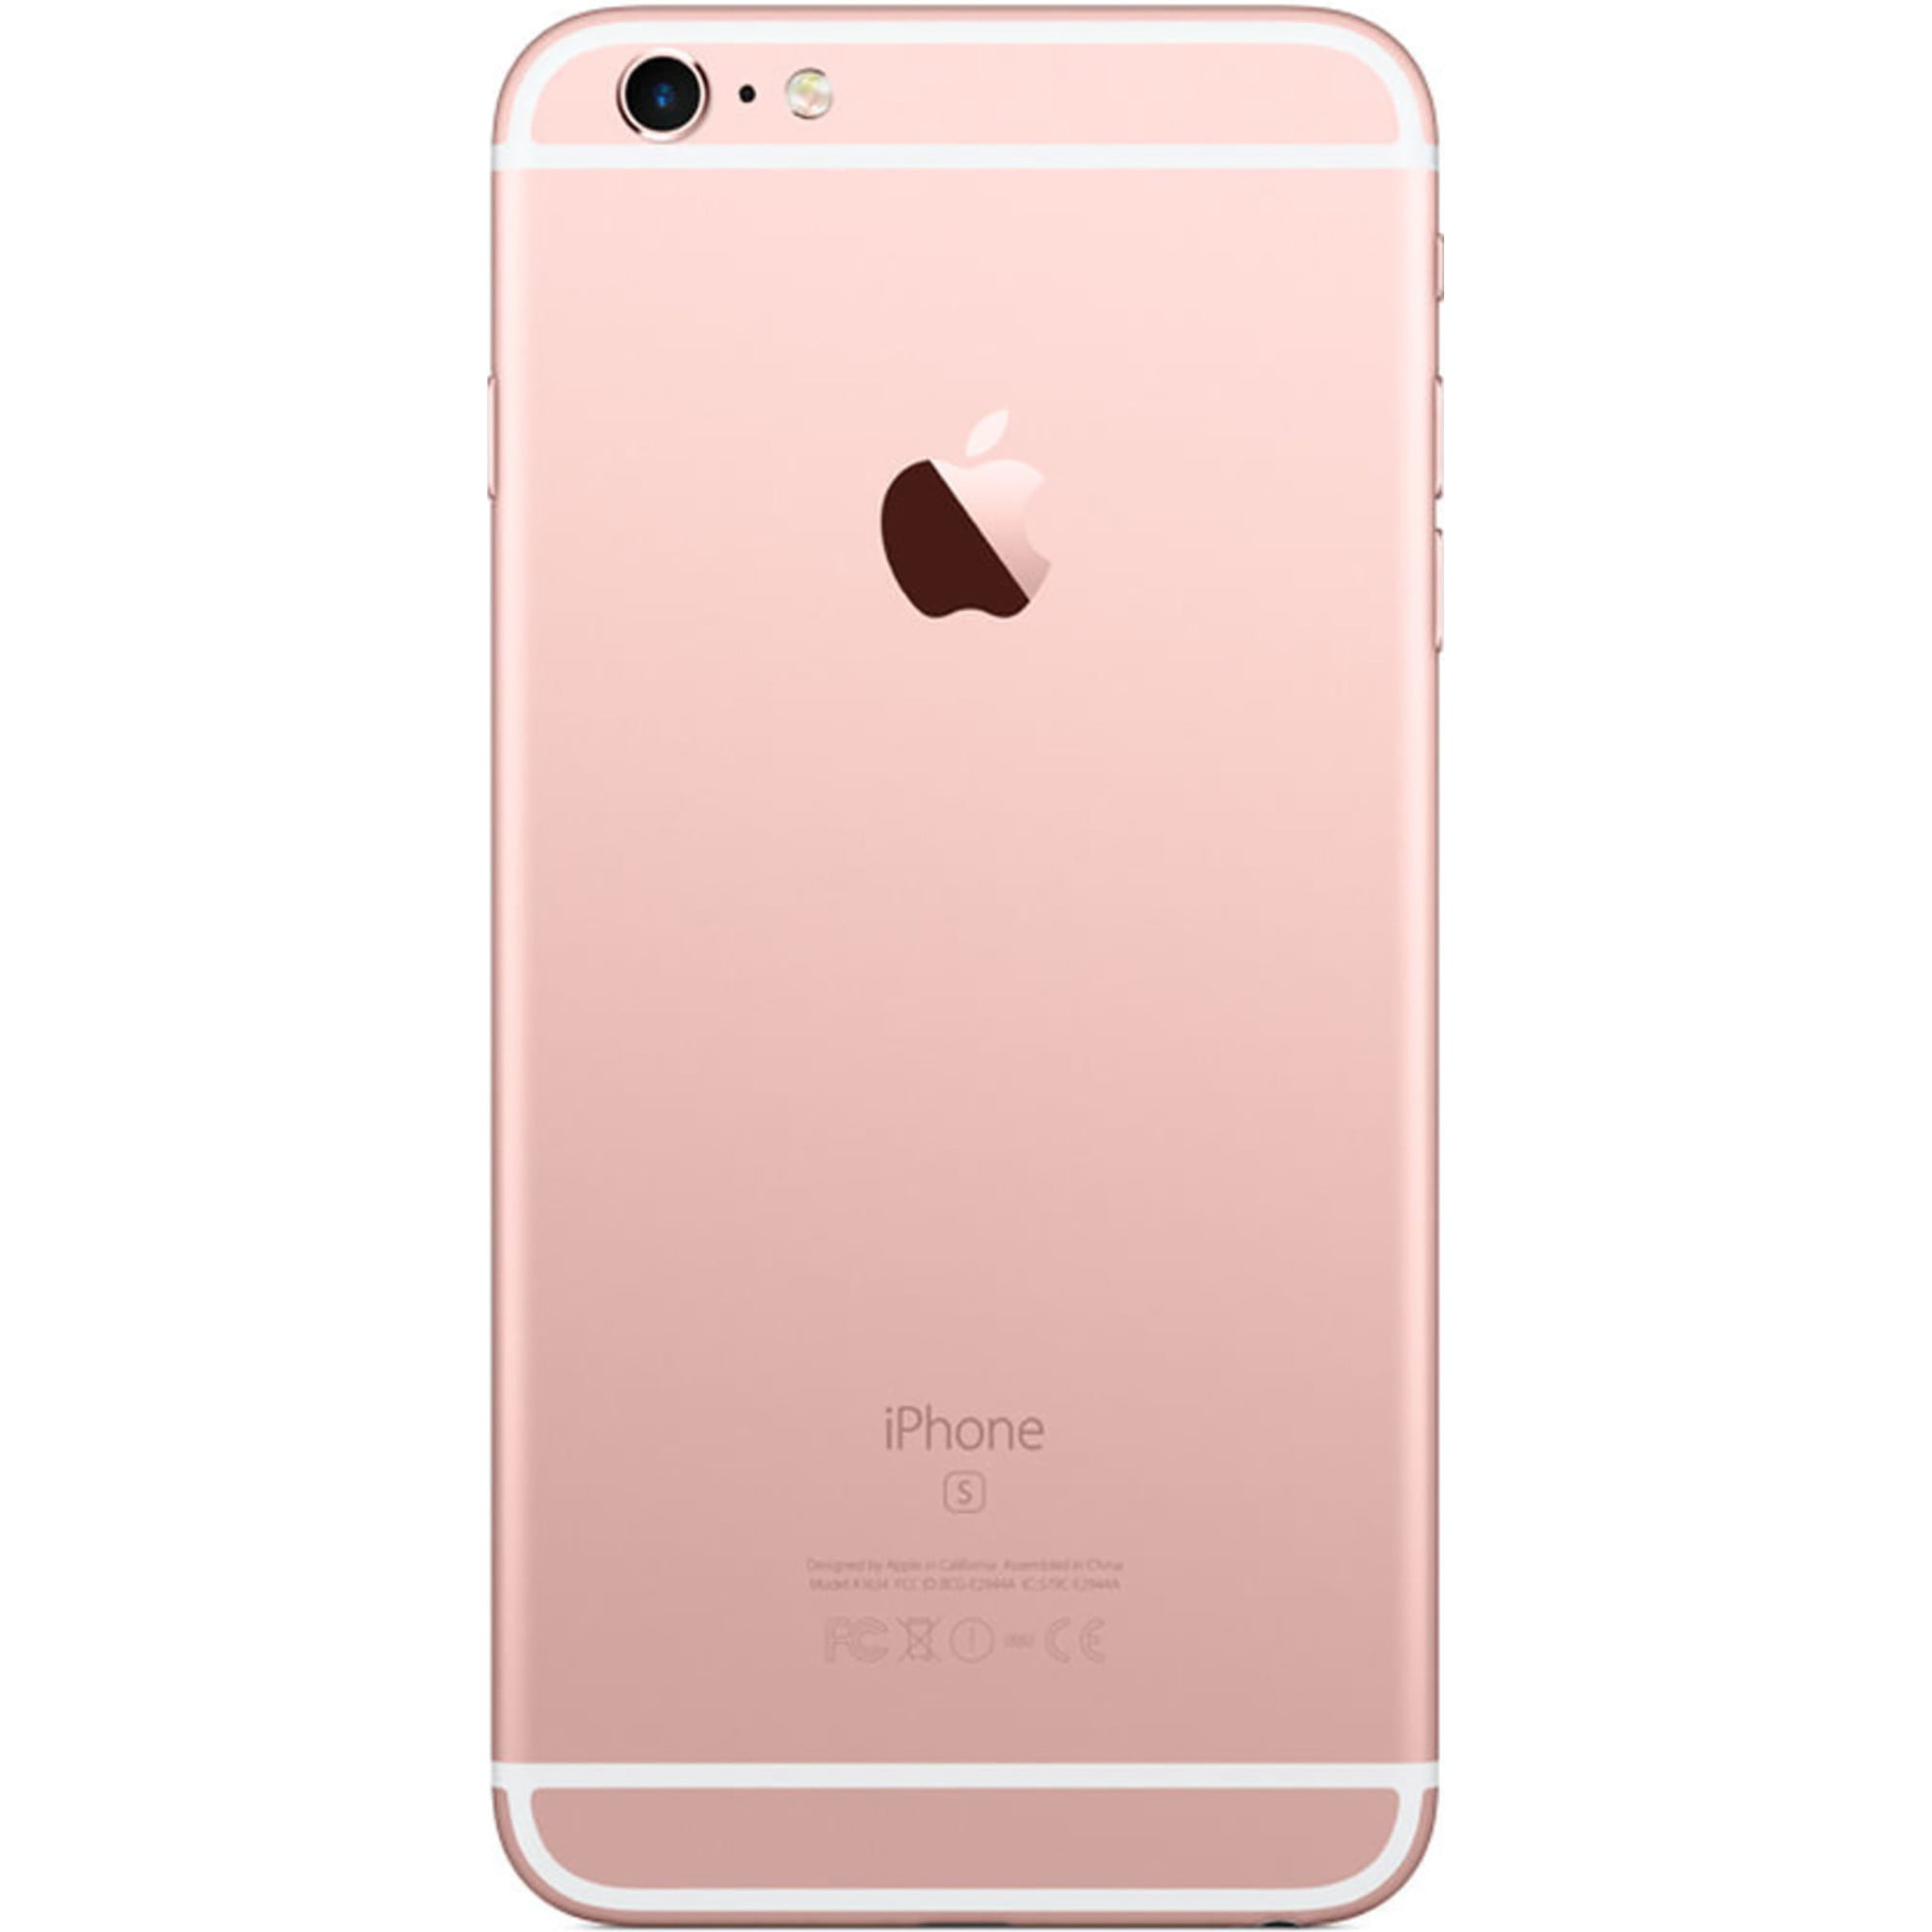 Apple iPhone 6S PLUS 128GB Unlocked (GSM, not CDMA), Rose Gold 